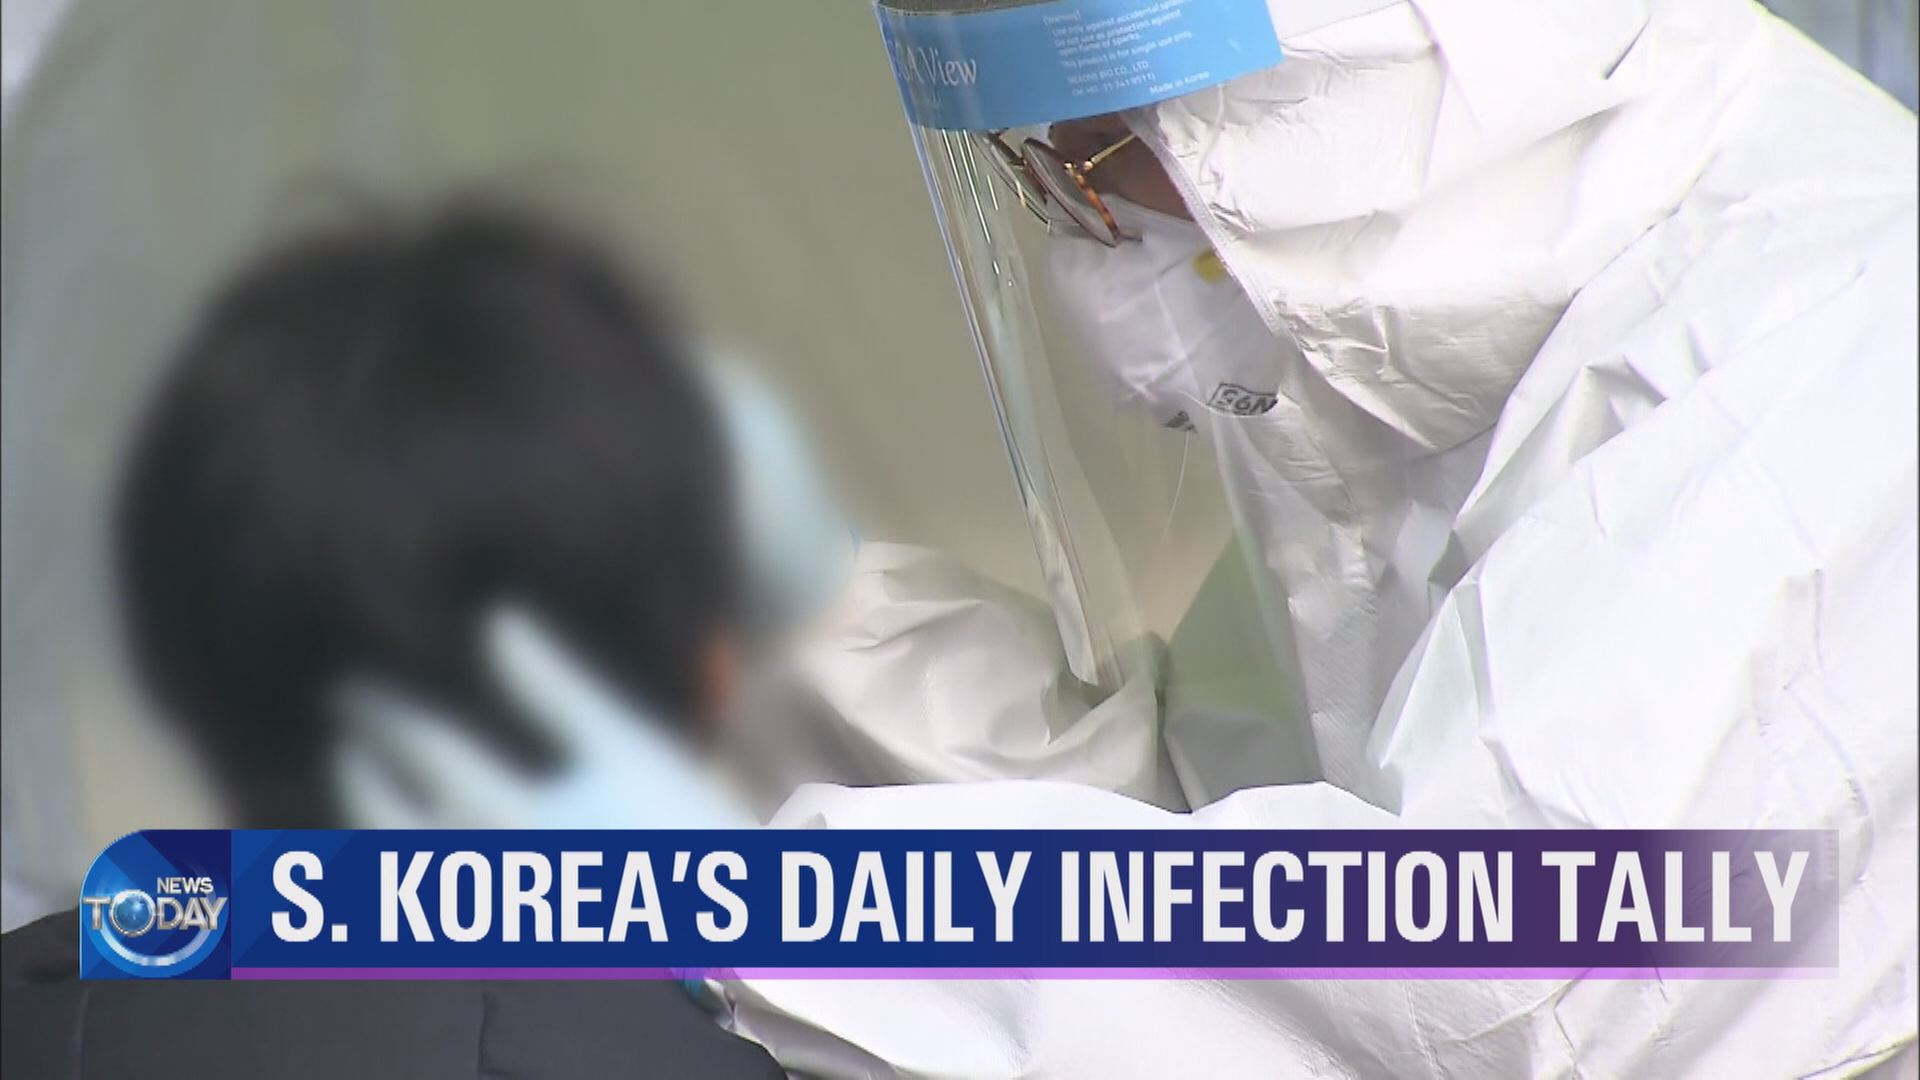 S. KOREA'S DAILY INFECTION TALLY